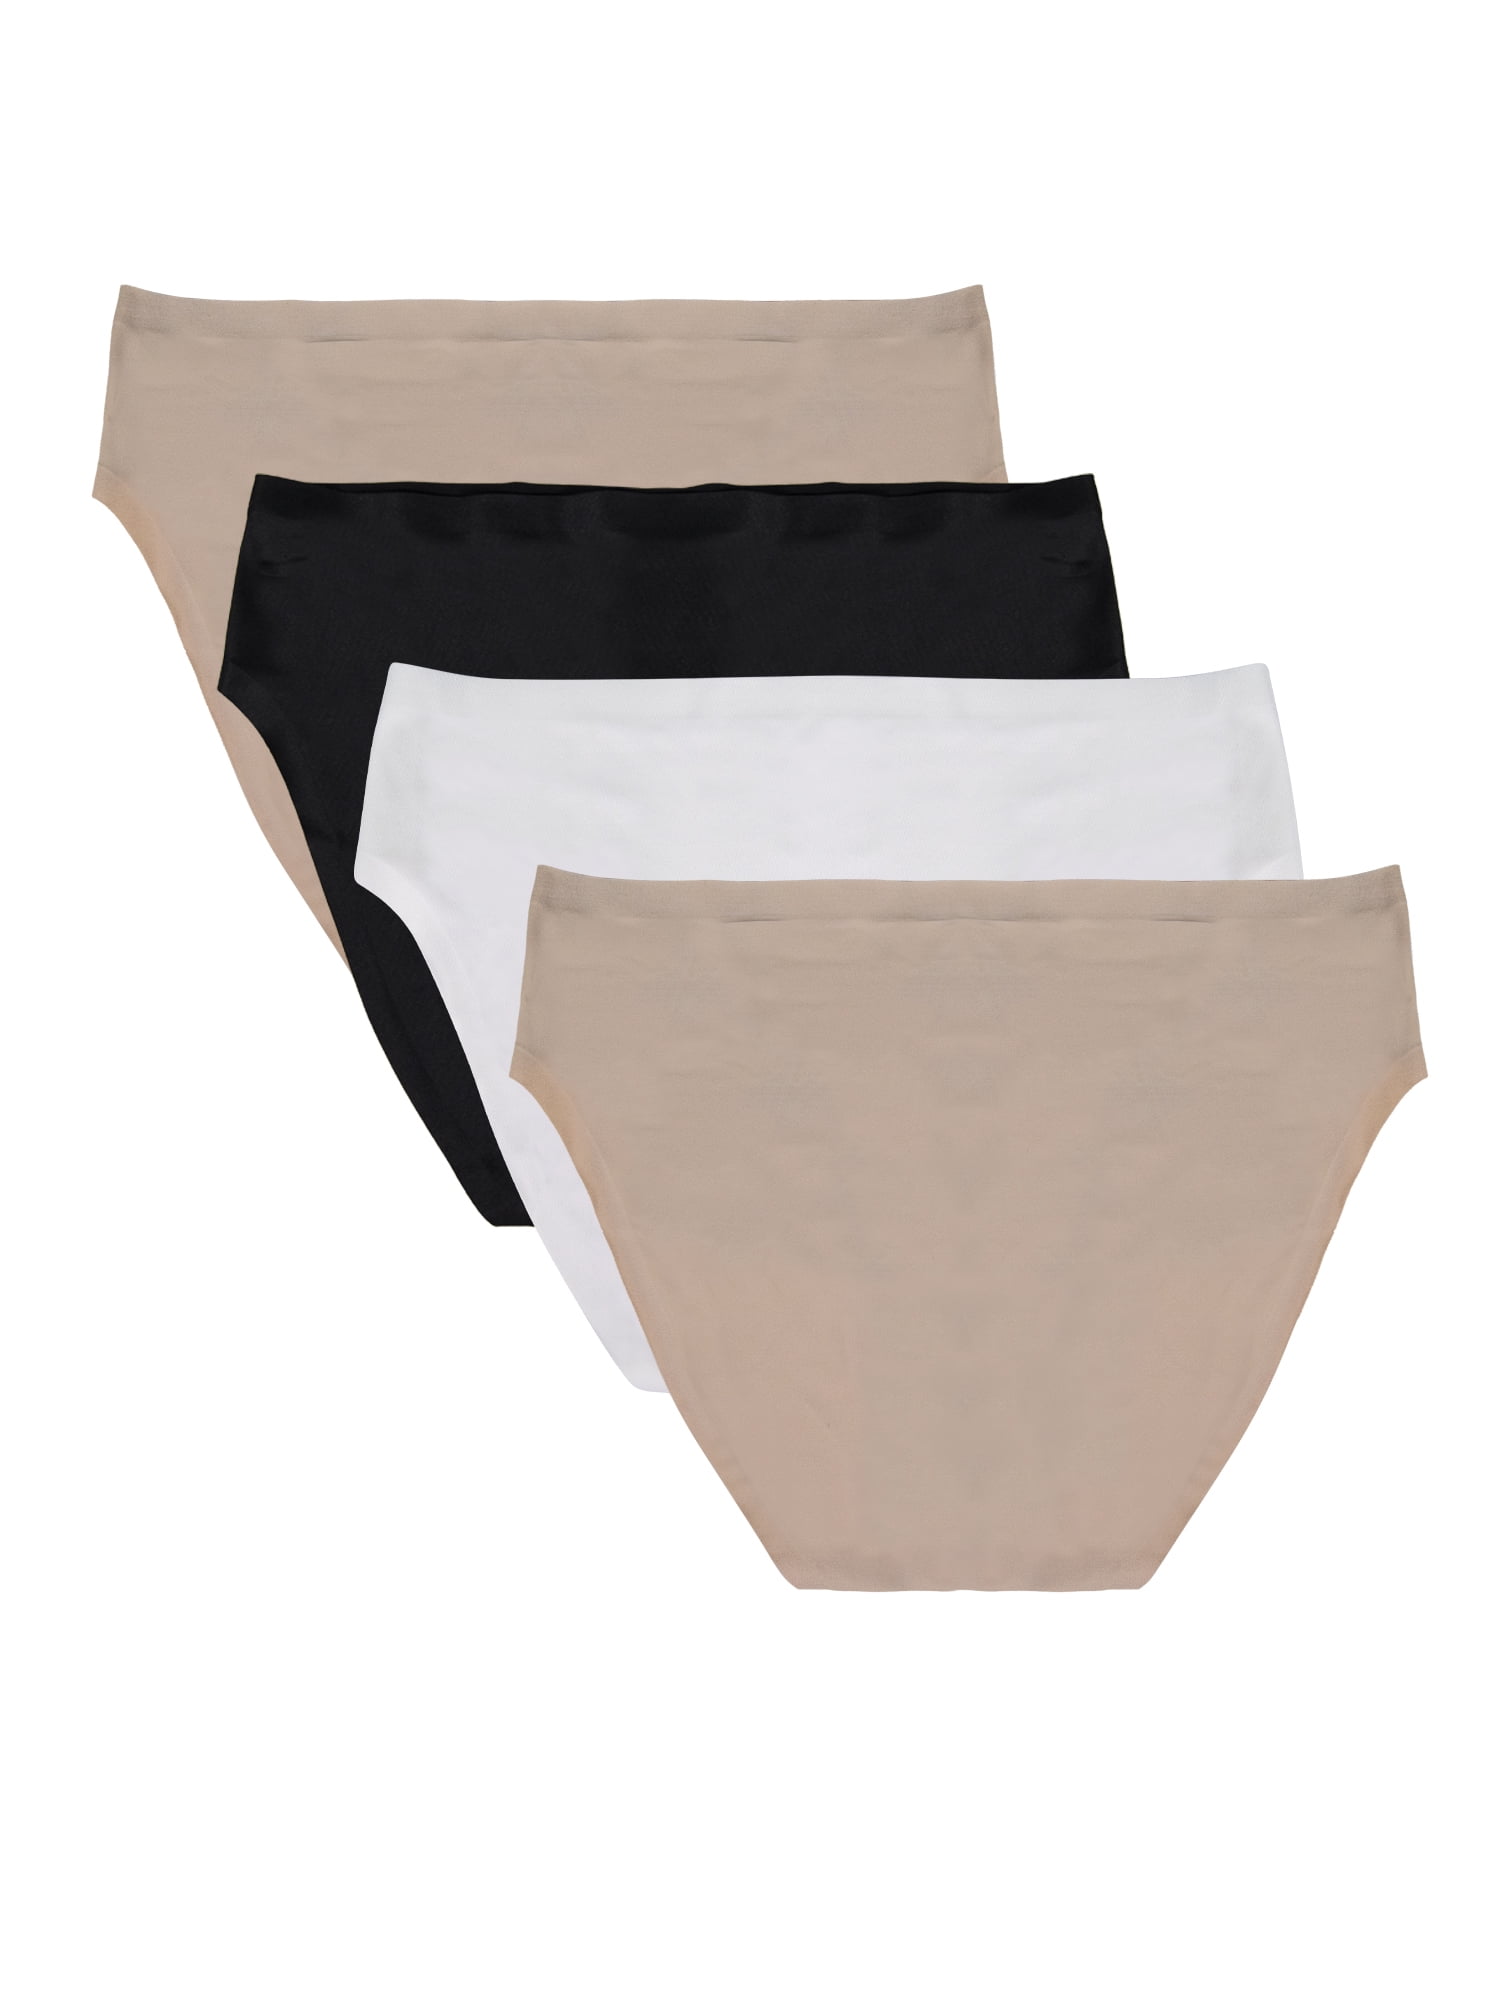 Women's Lace Cheeky Underwear - Auden Light Taupe L, Light Brown 